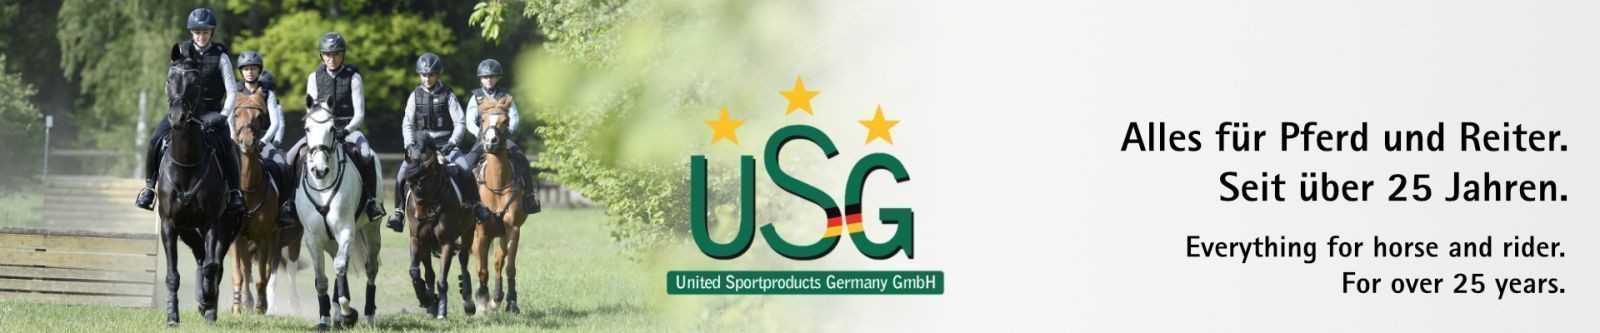 Downloads - USG - United Sportproducts Germany GmbH